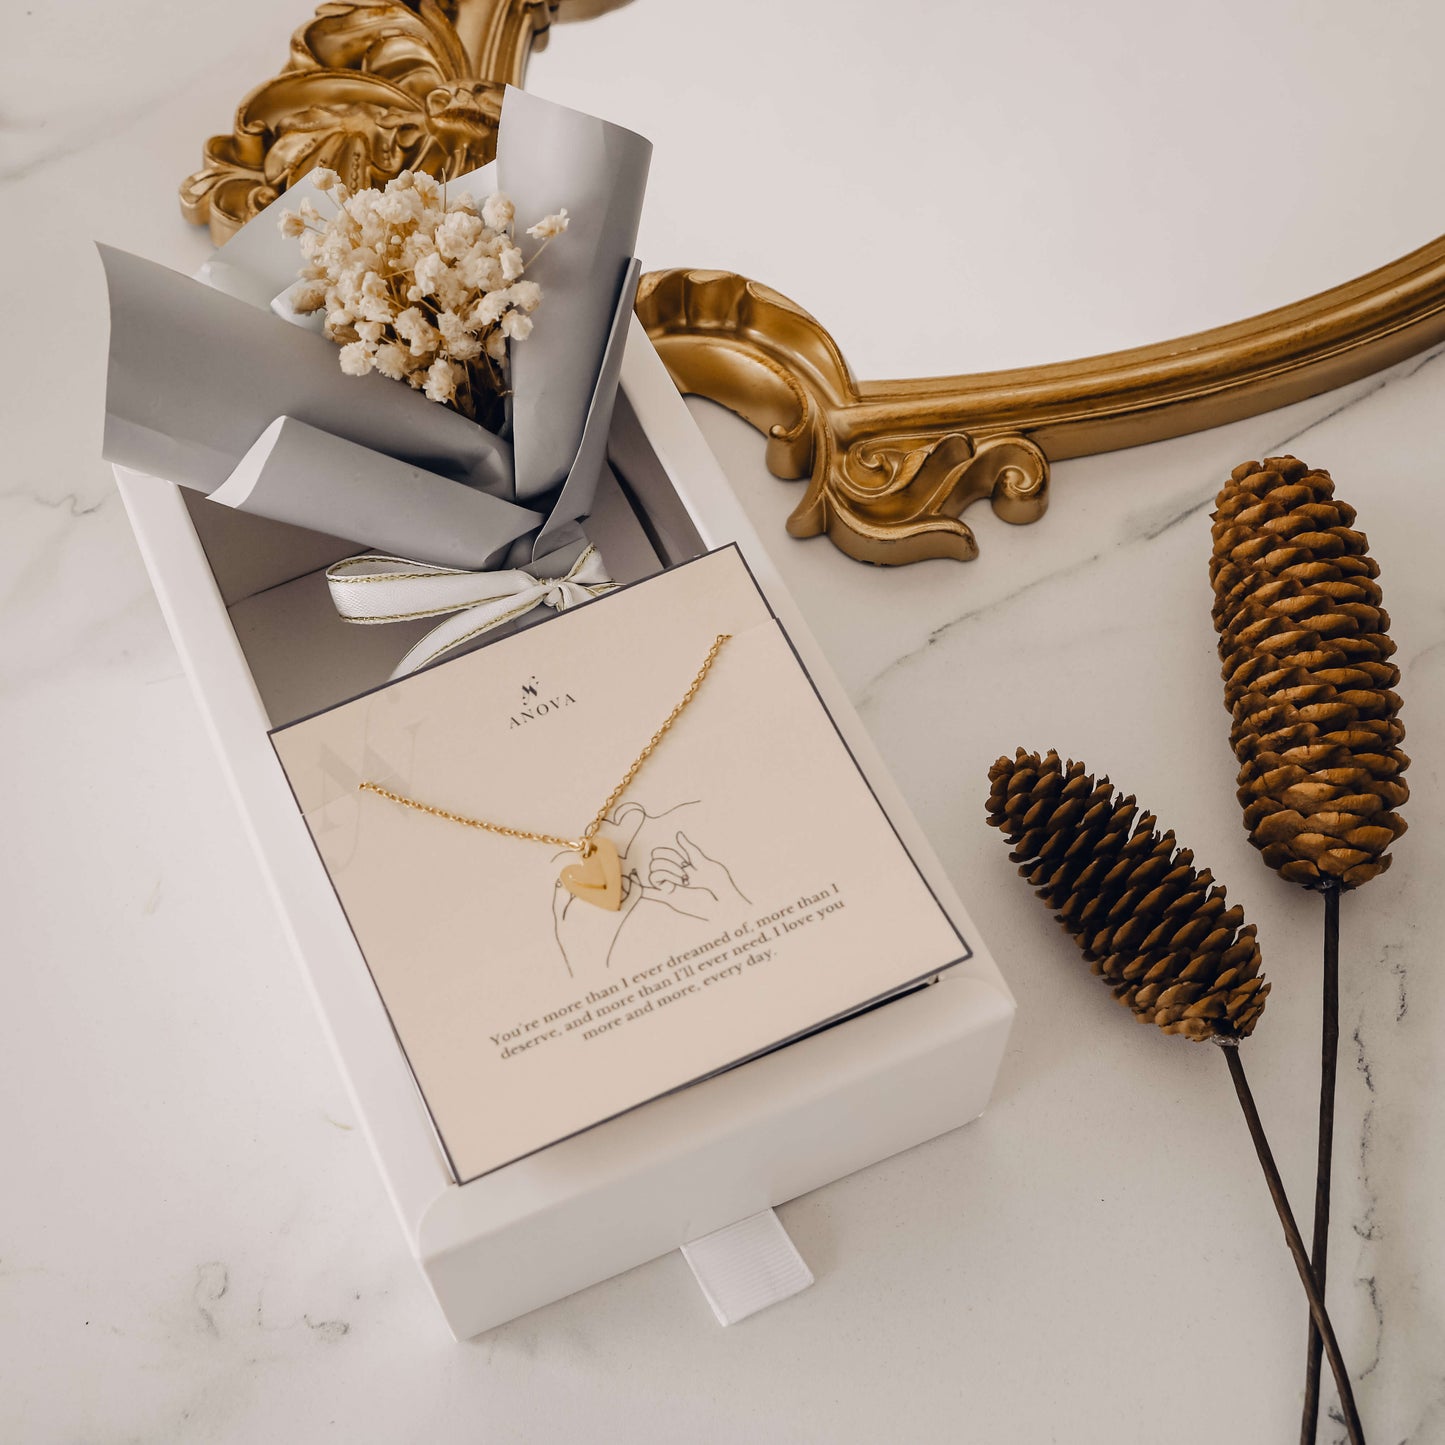 AMARA Gold Heart Pendant Personalized Necklace